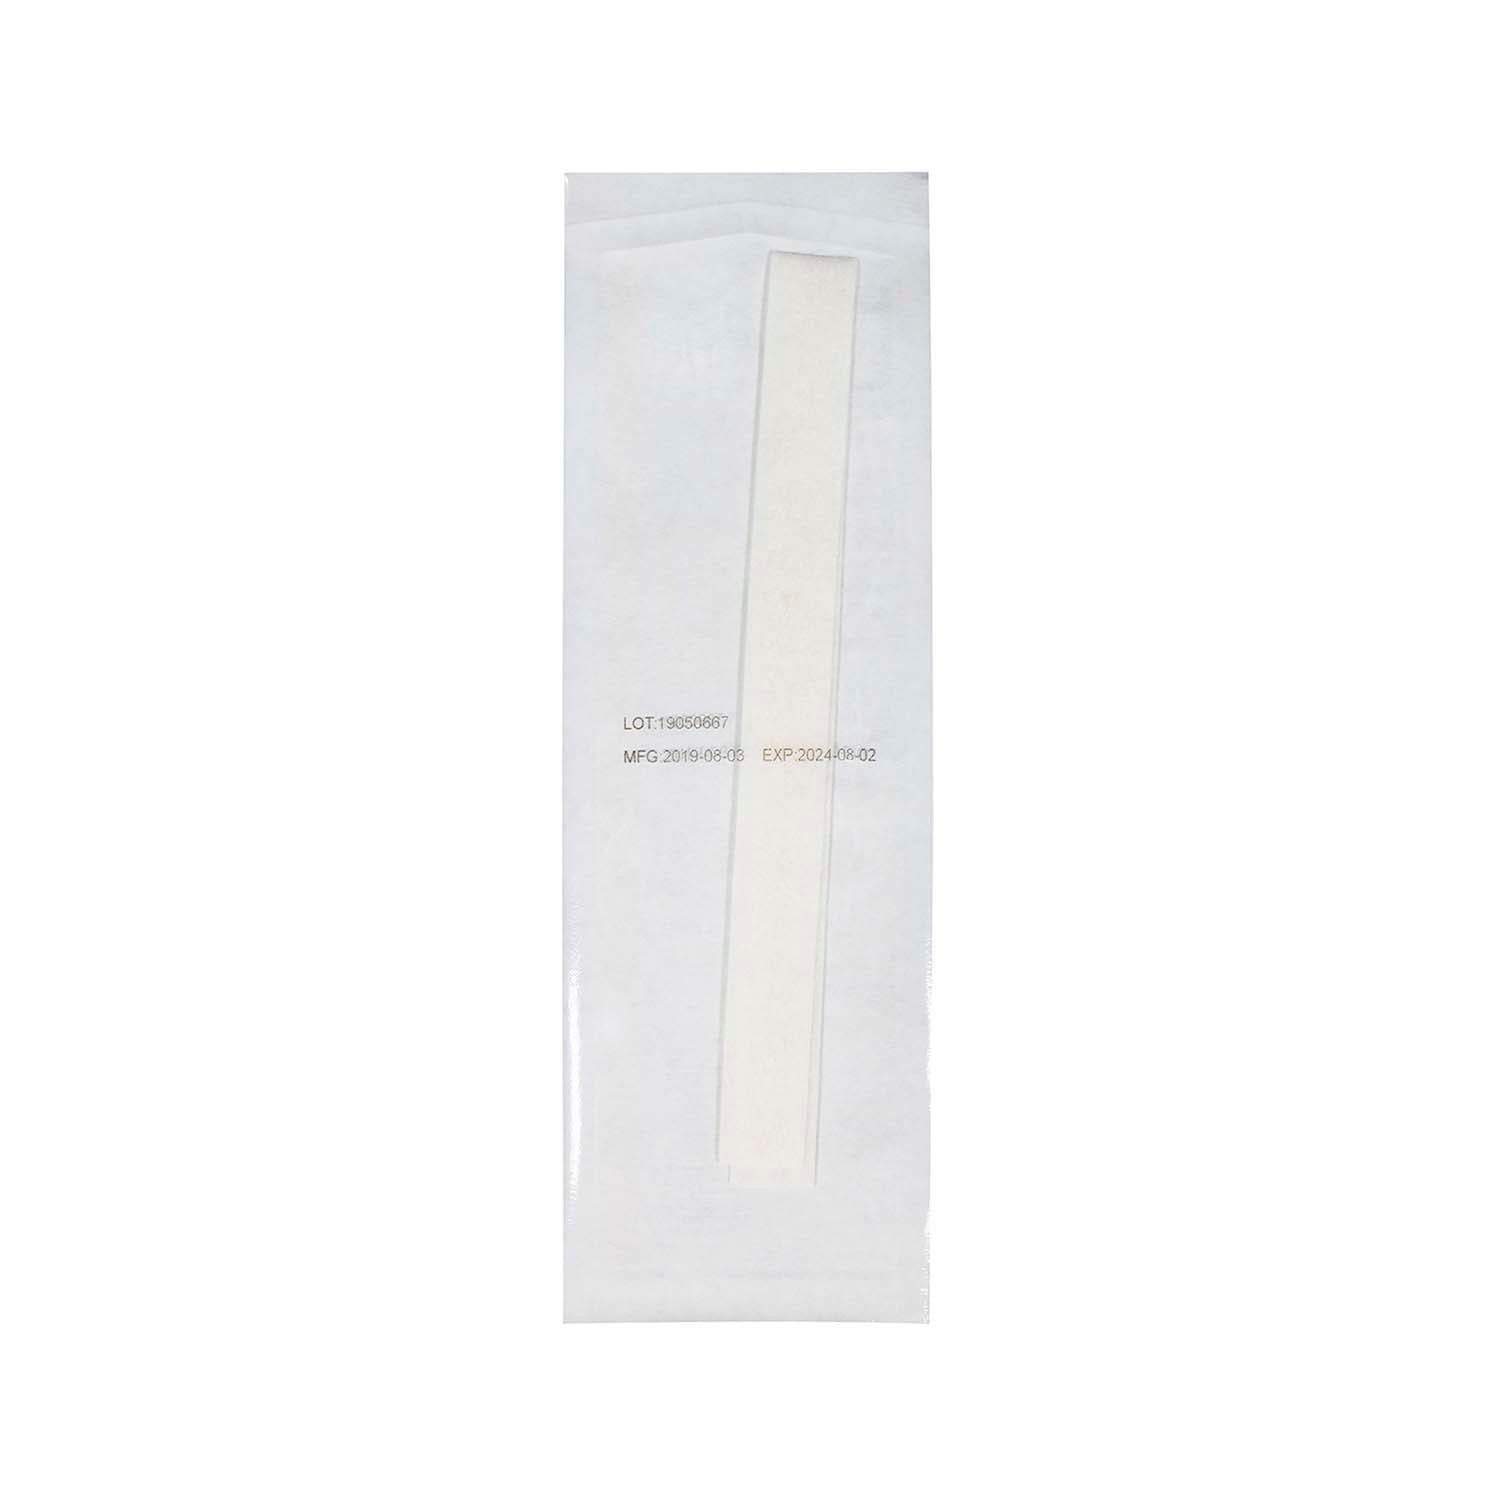 FarlaFIBRE Gelling Fibre | 2 x 45cm | Ribbon | Pack of 5 (3)